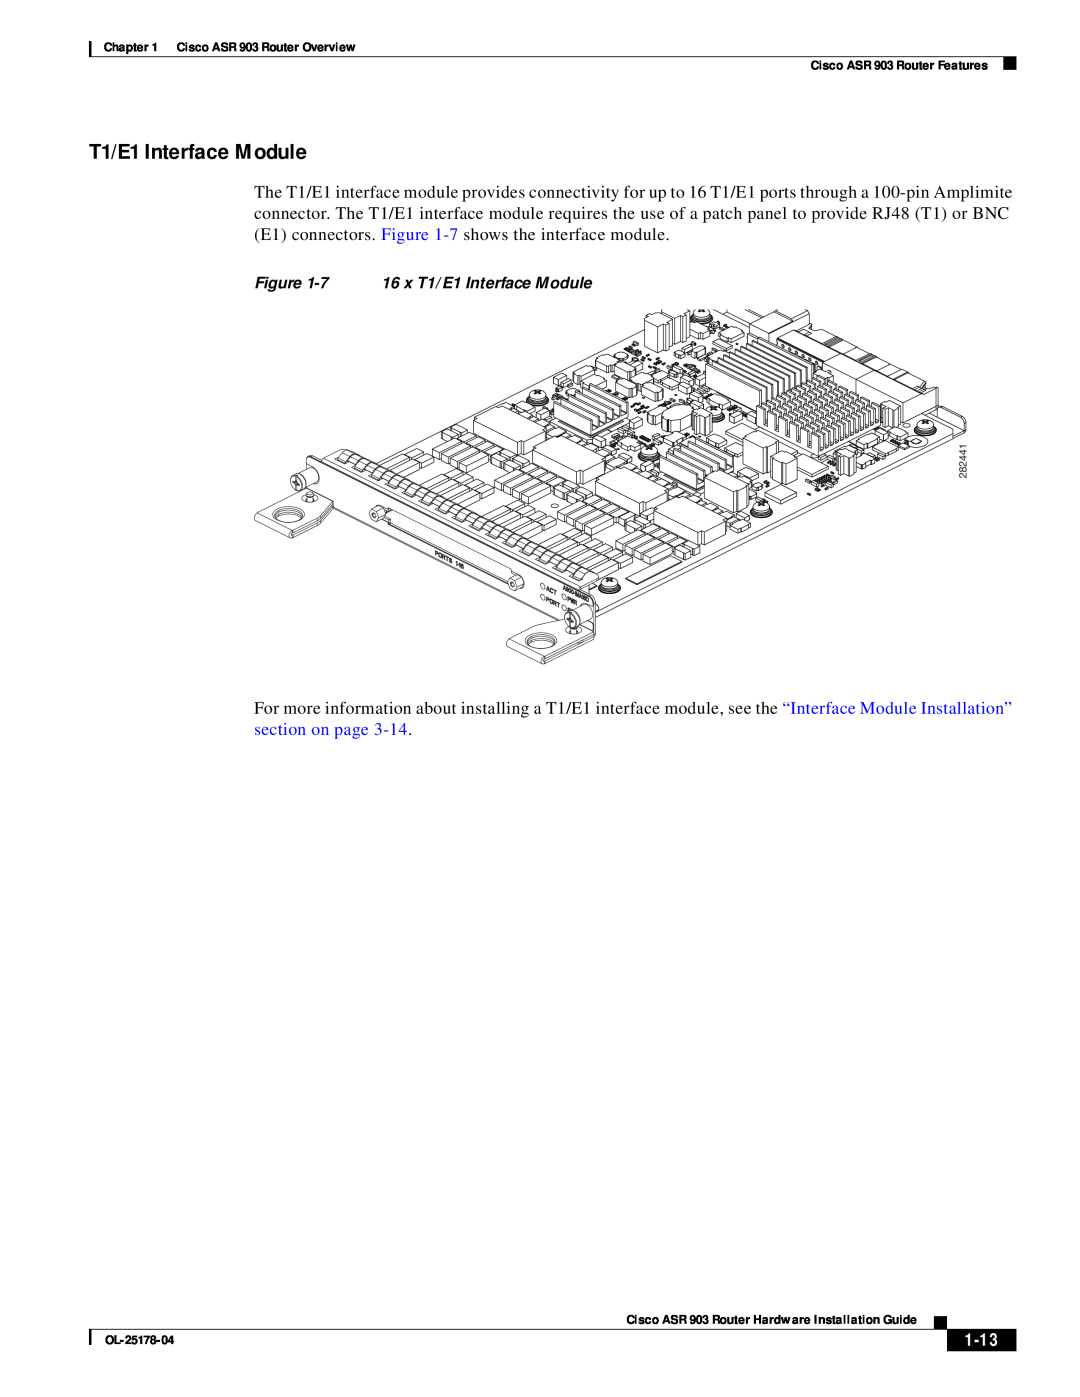 Cisco Systems ASR 903 manual 1-13, 7 16 x T1/E1 Interface Module 